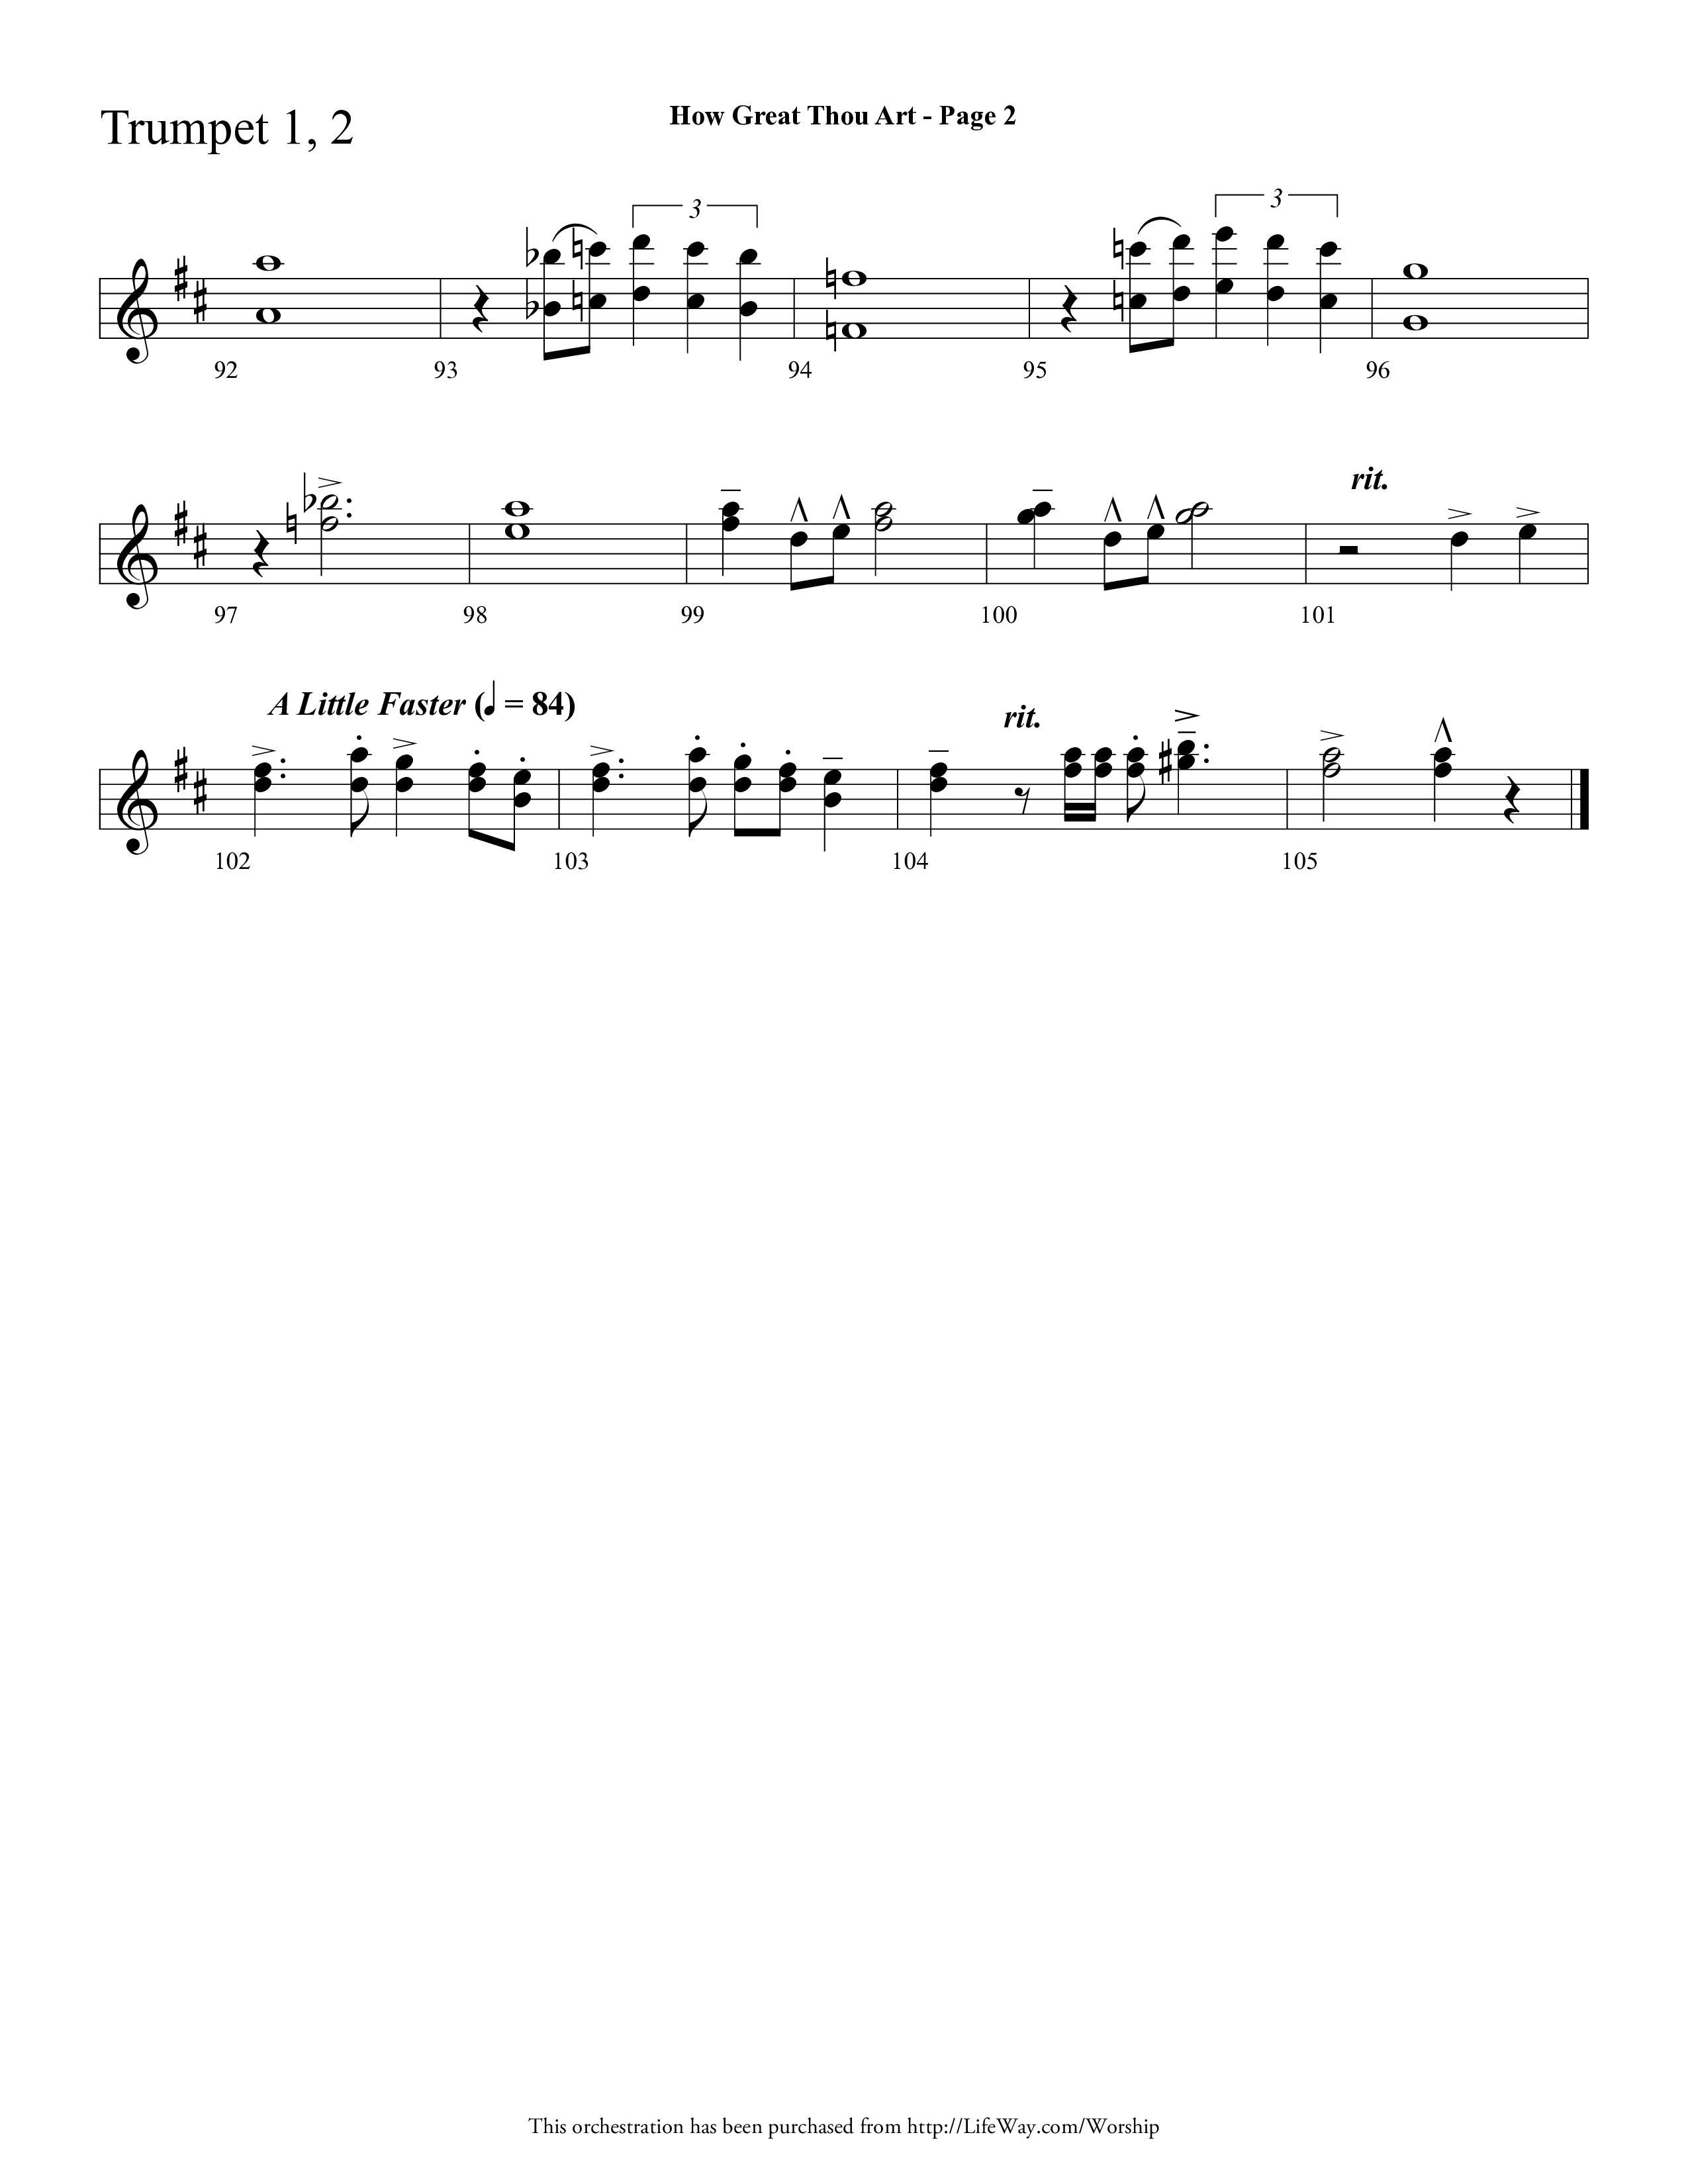 How Great Thou Art (Choral Anthem SATB) Trumpet 1,2 (Lifeway Choral / Arr. Dave Williamson)